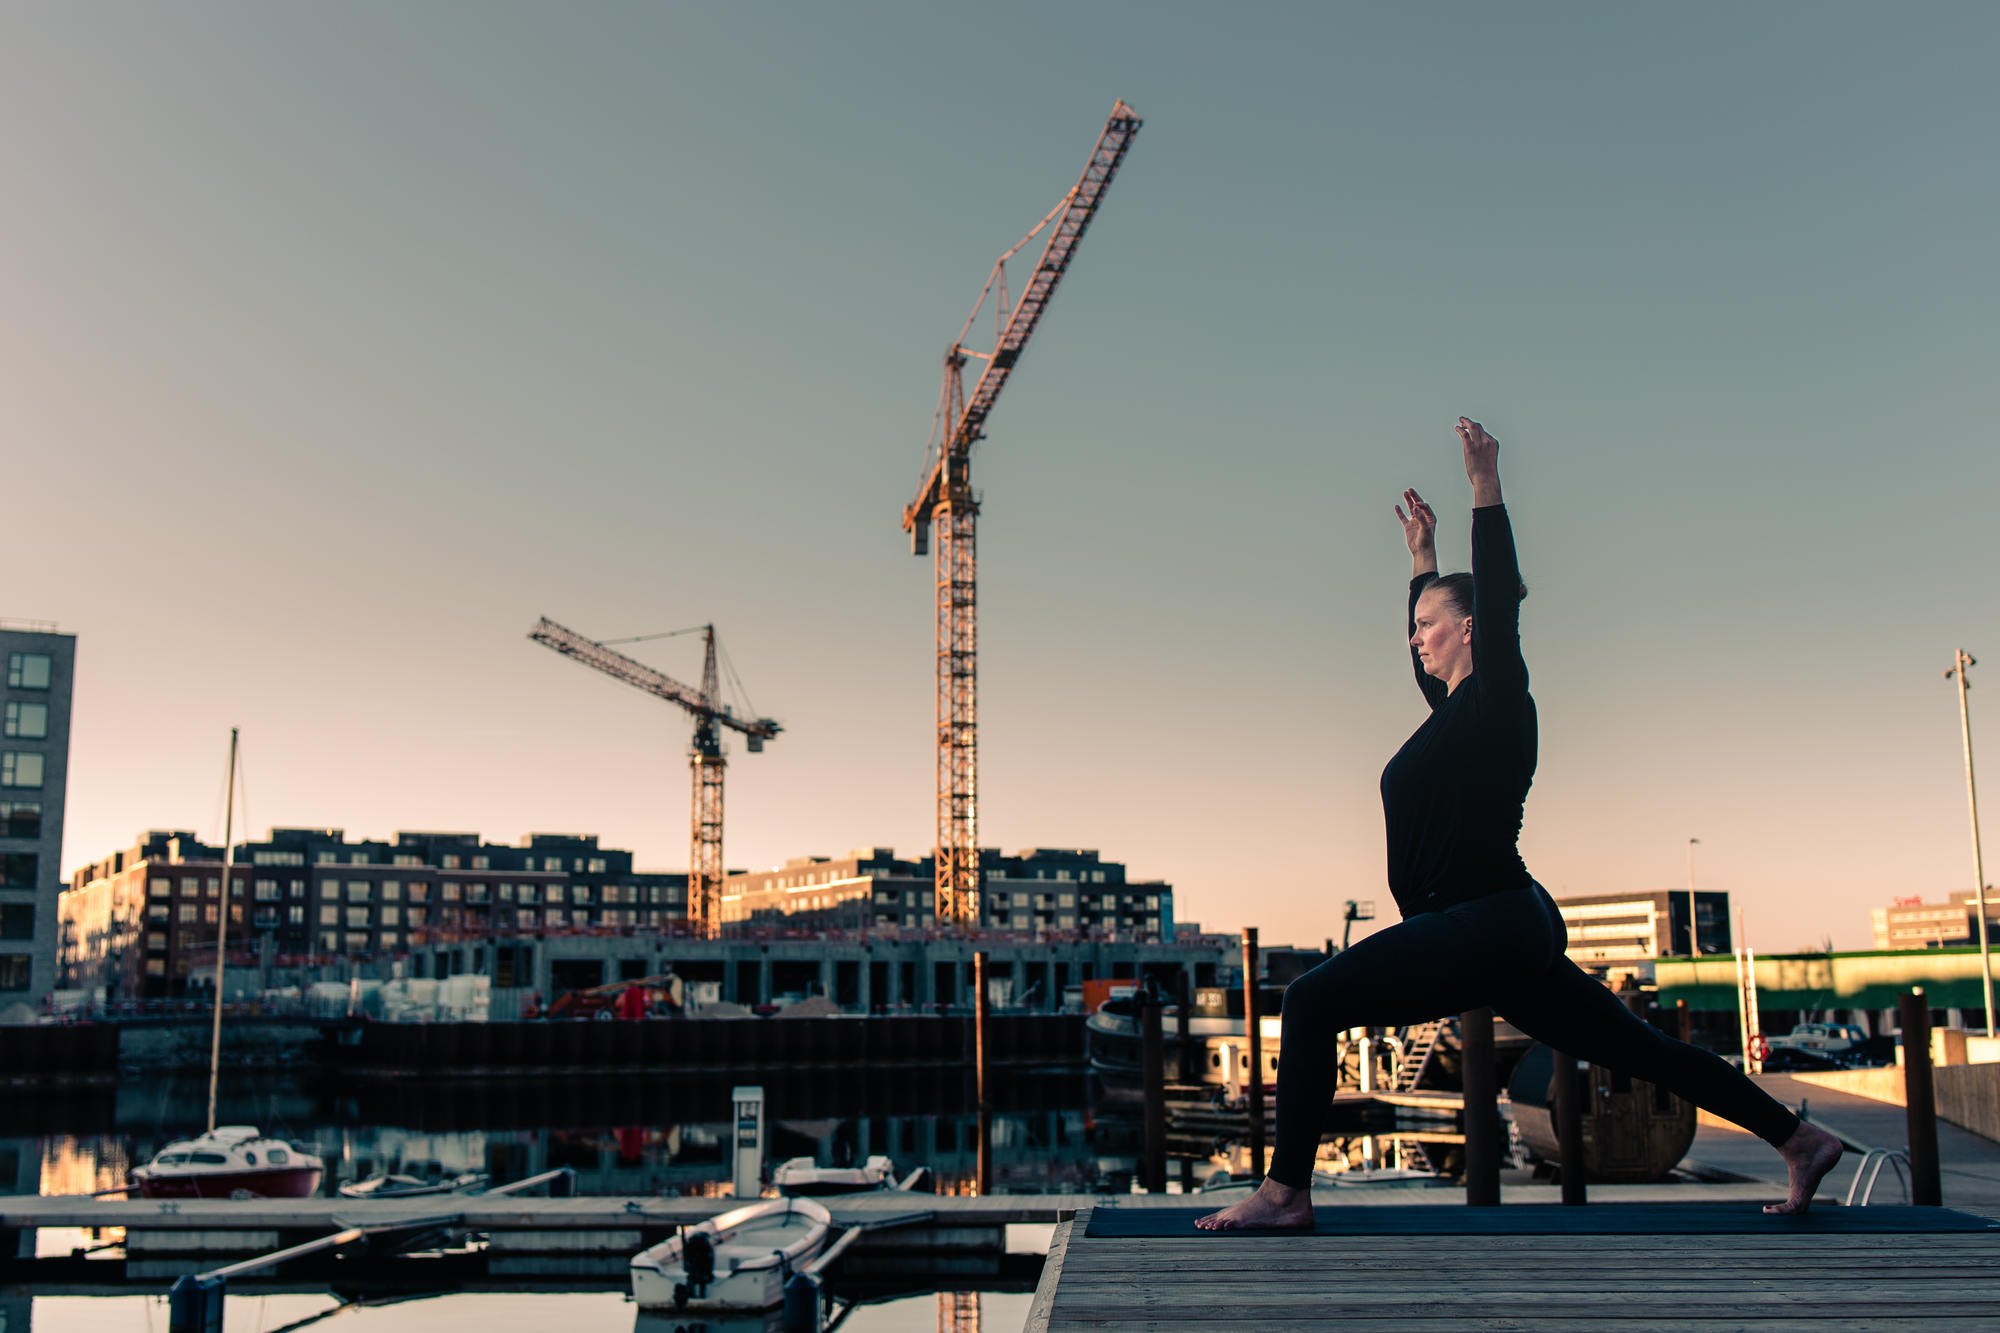 urban-yoga-photoshoot-copenhagen-silhouettes-poses-22